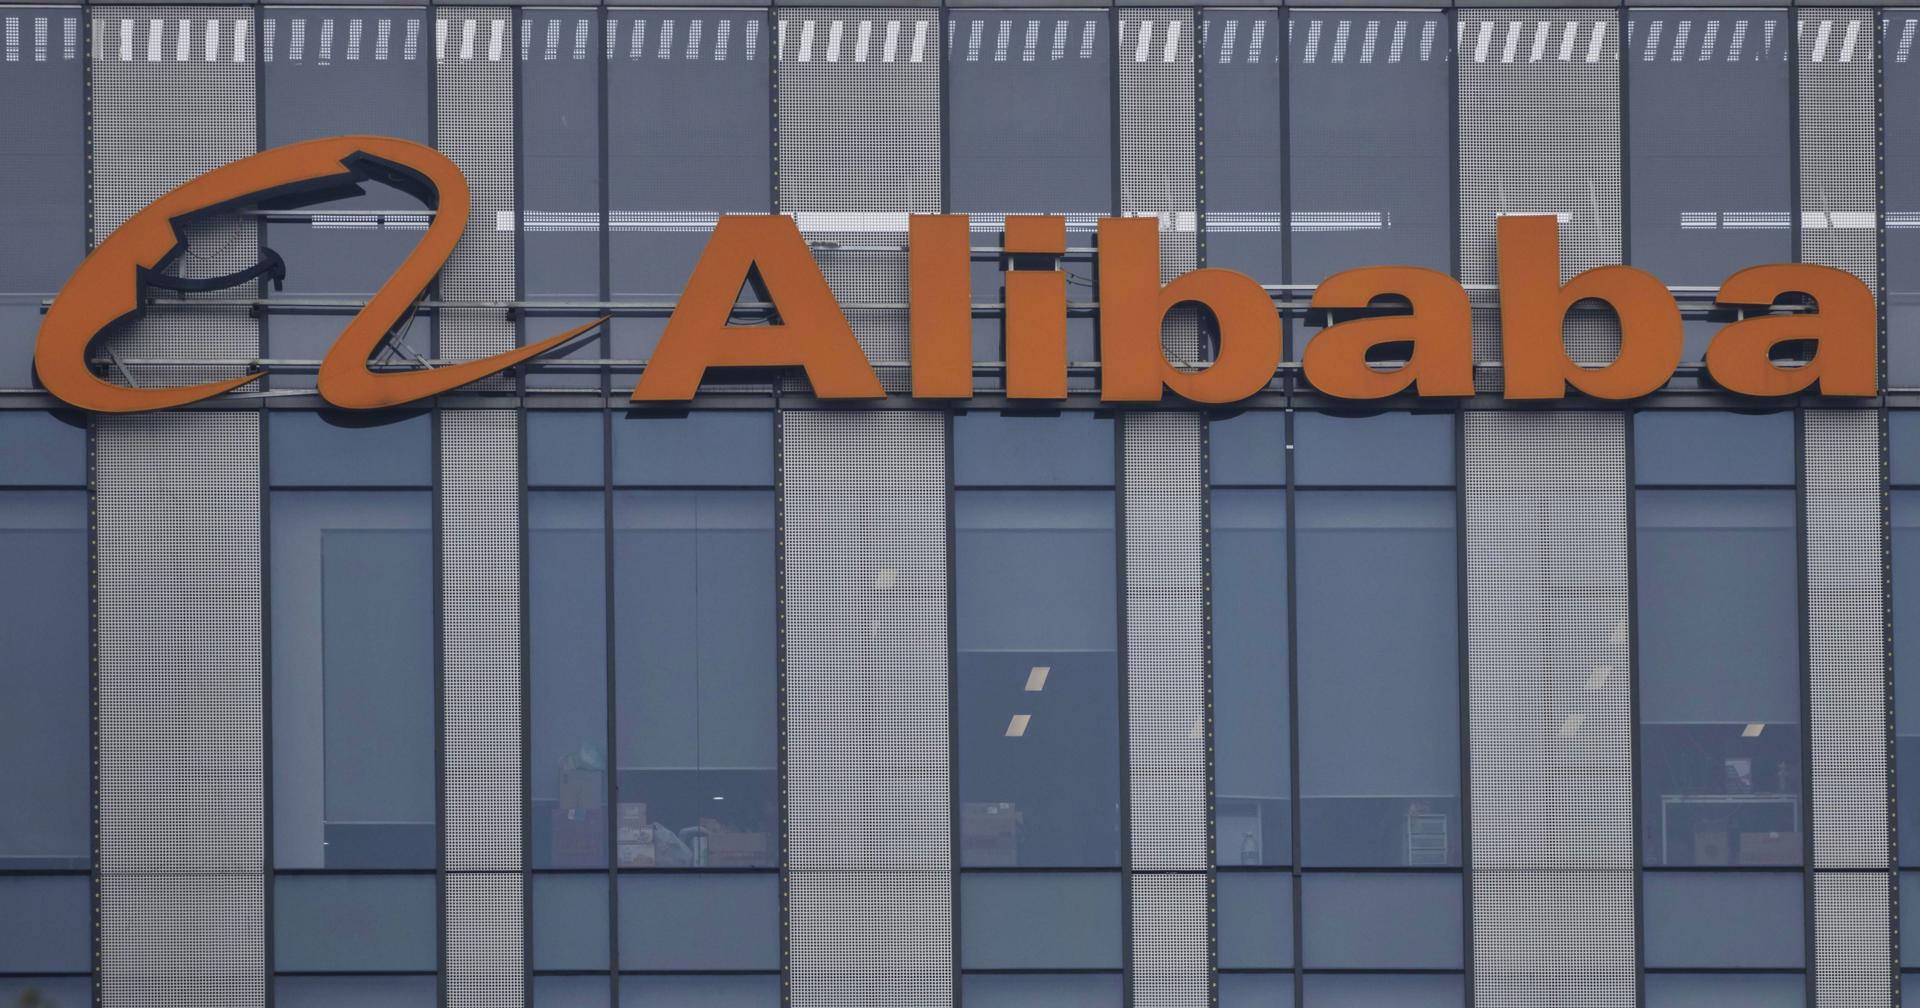 La china Alibaba también prepara una IA conversacional similar a ChatGPT